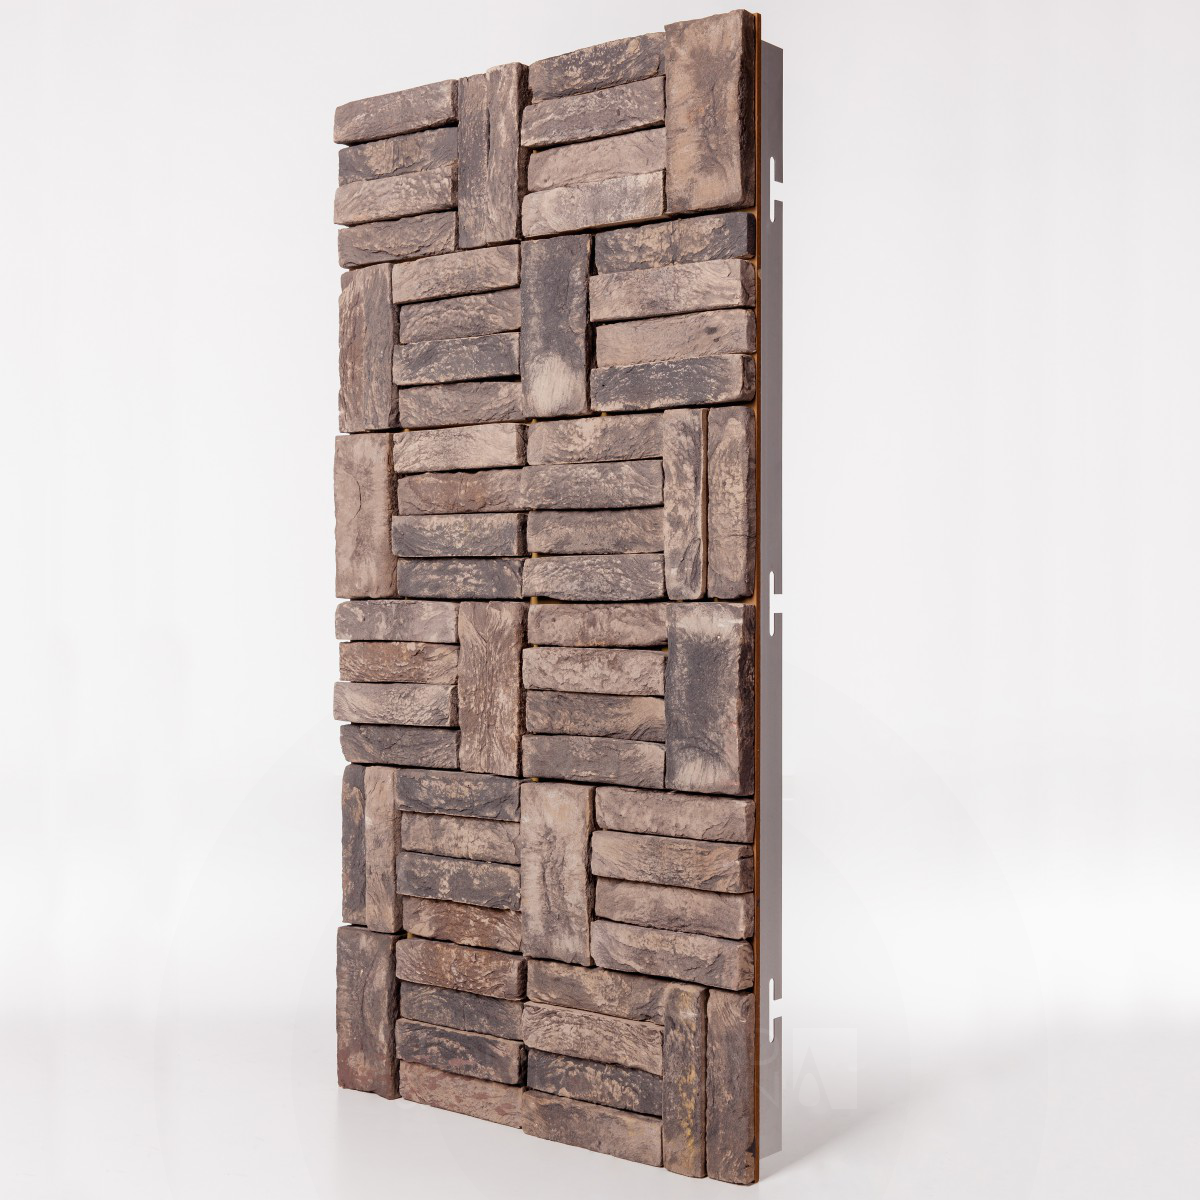 Signa Brick cladding system by Vandersanden Group